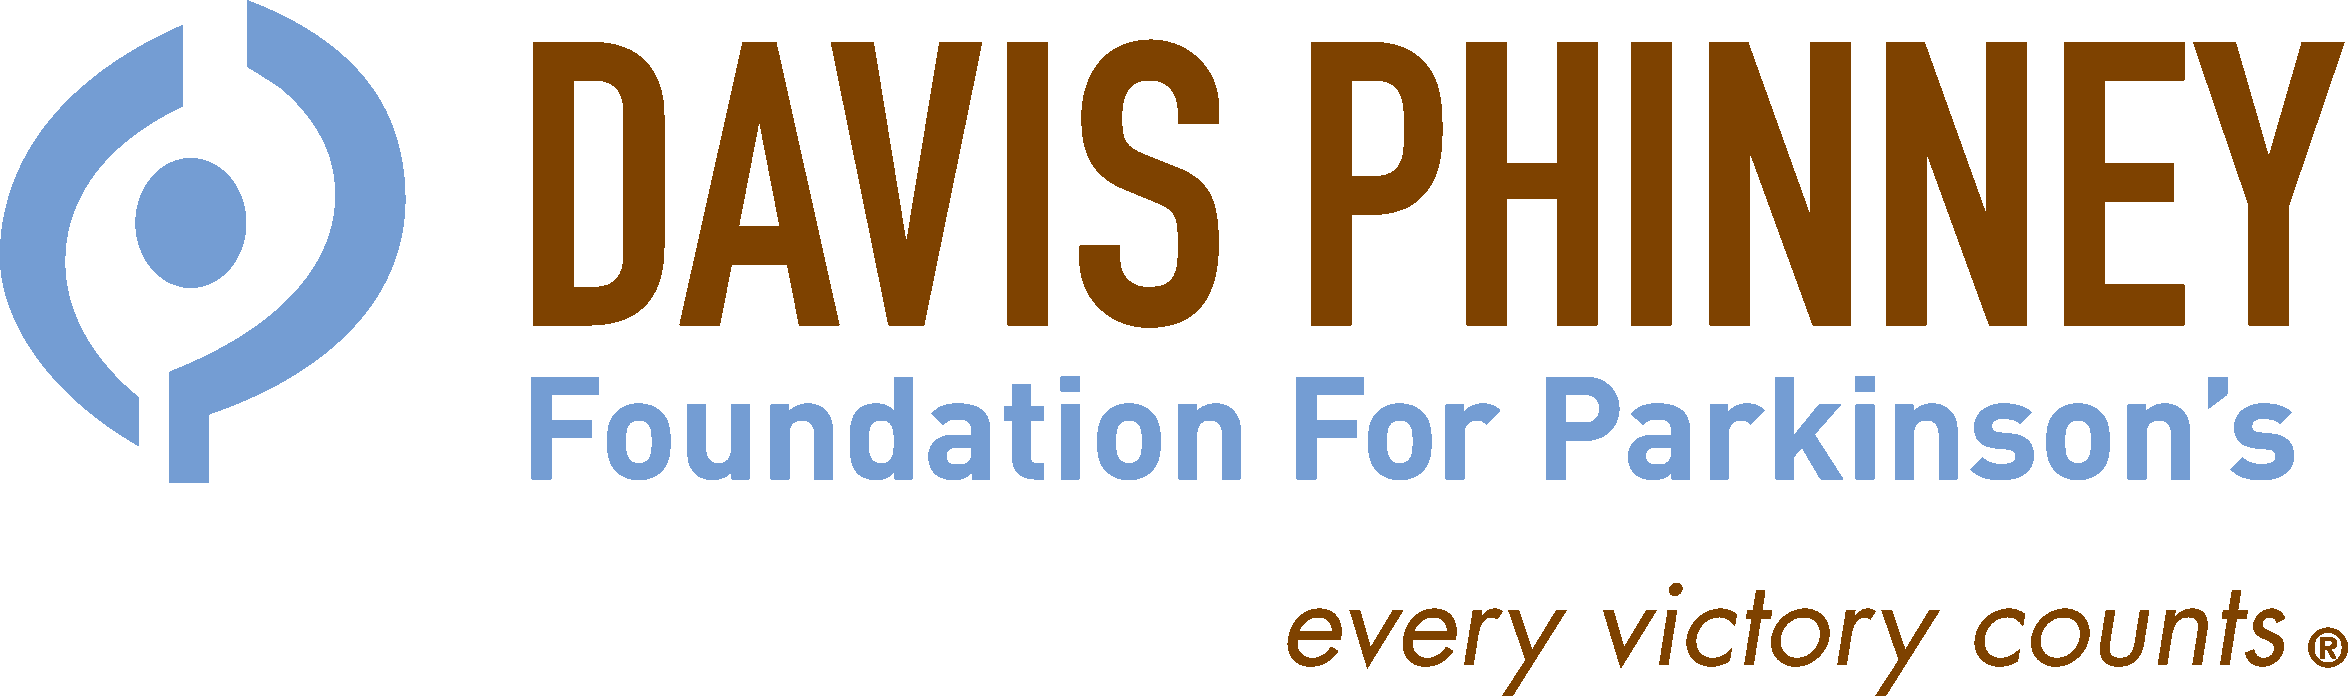 davis-phinney-foundation-logo